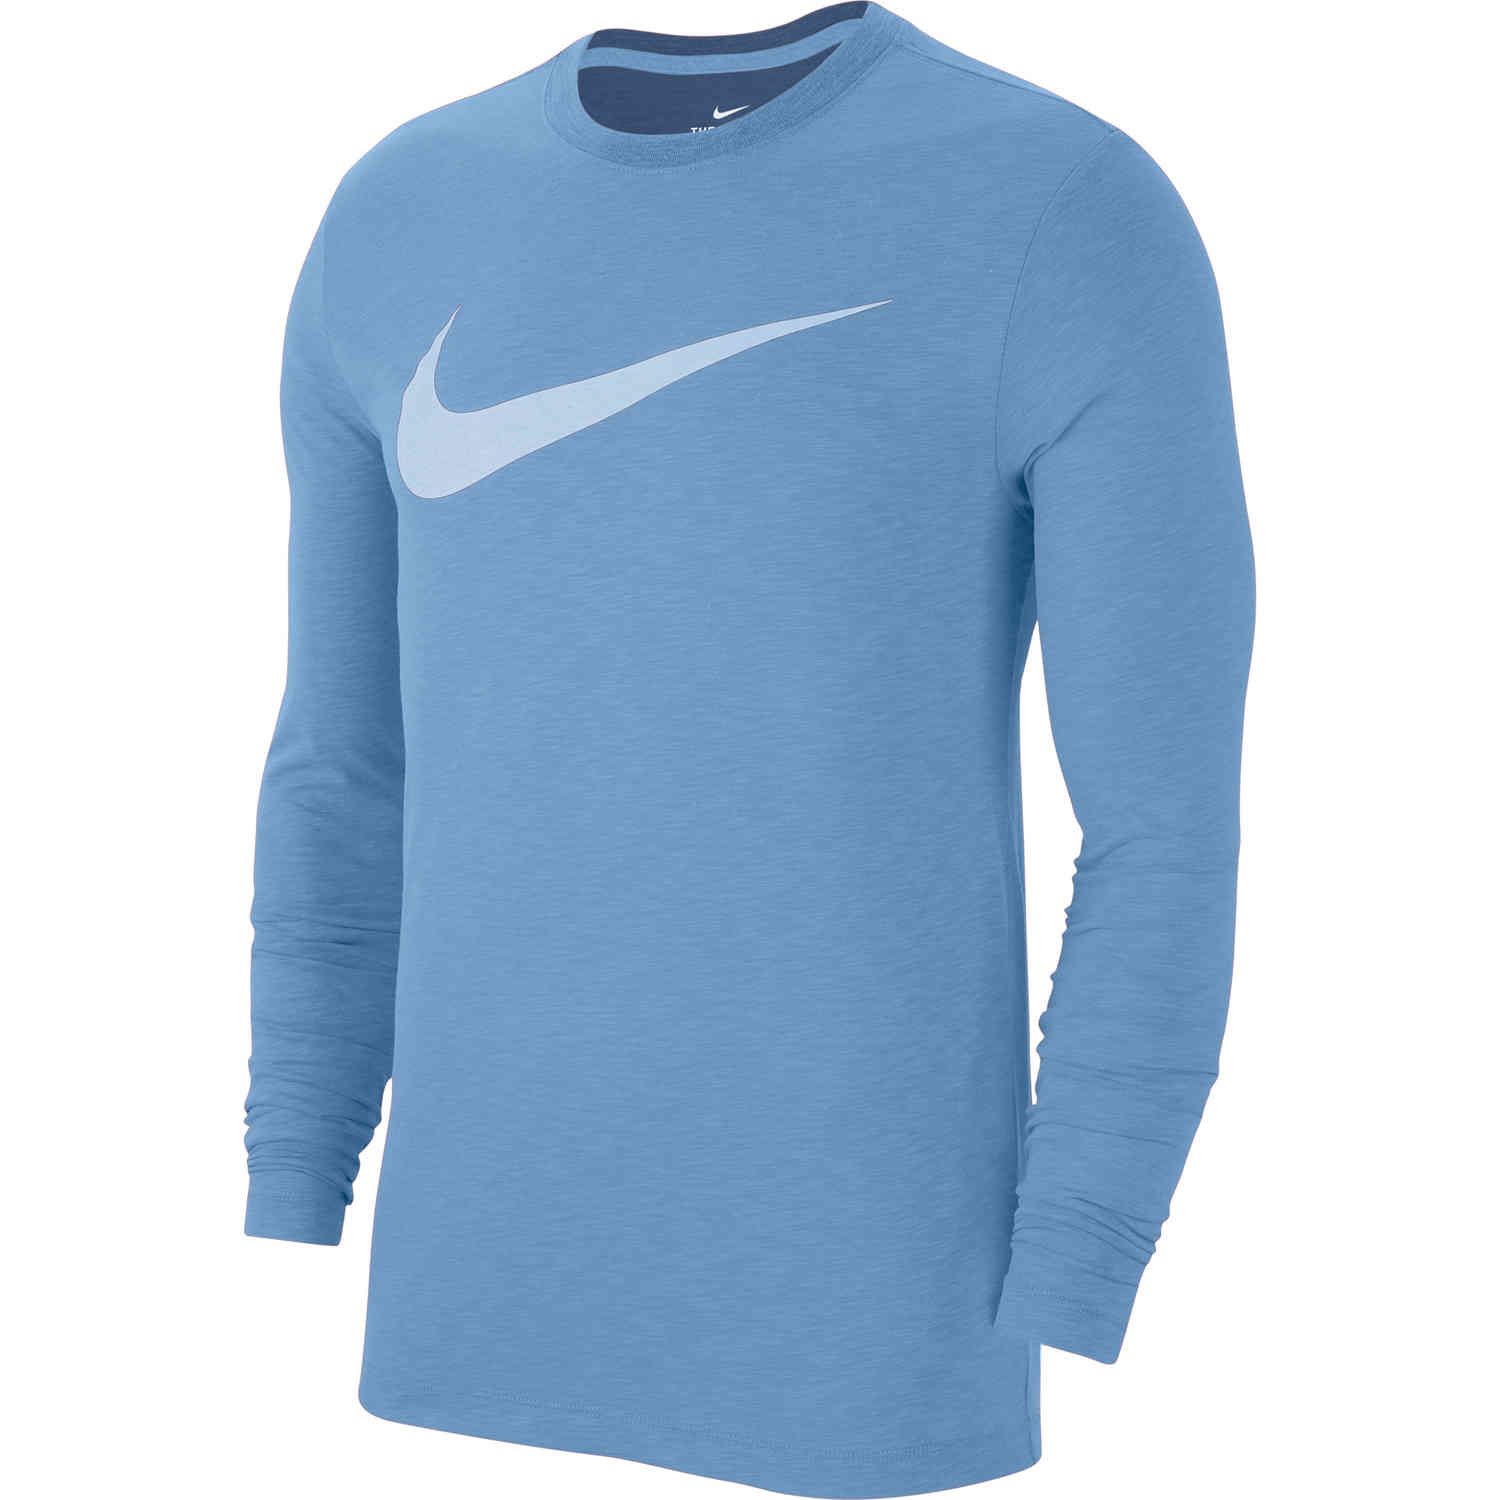 Nike Dri-Fit Cotton L/S Swoosh Tee - Light Blue - Soccer Master